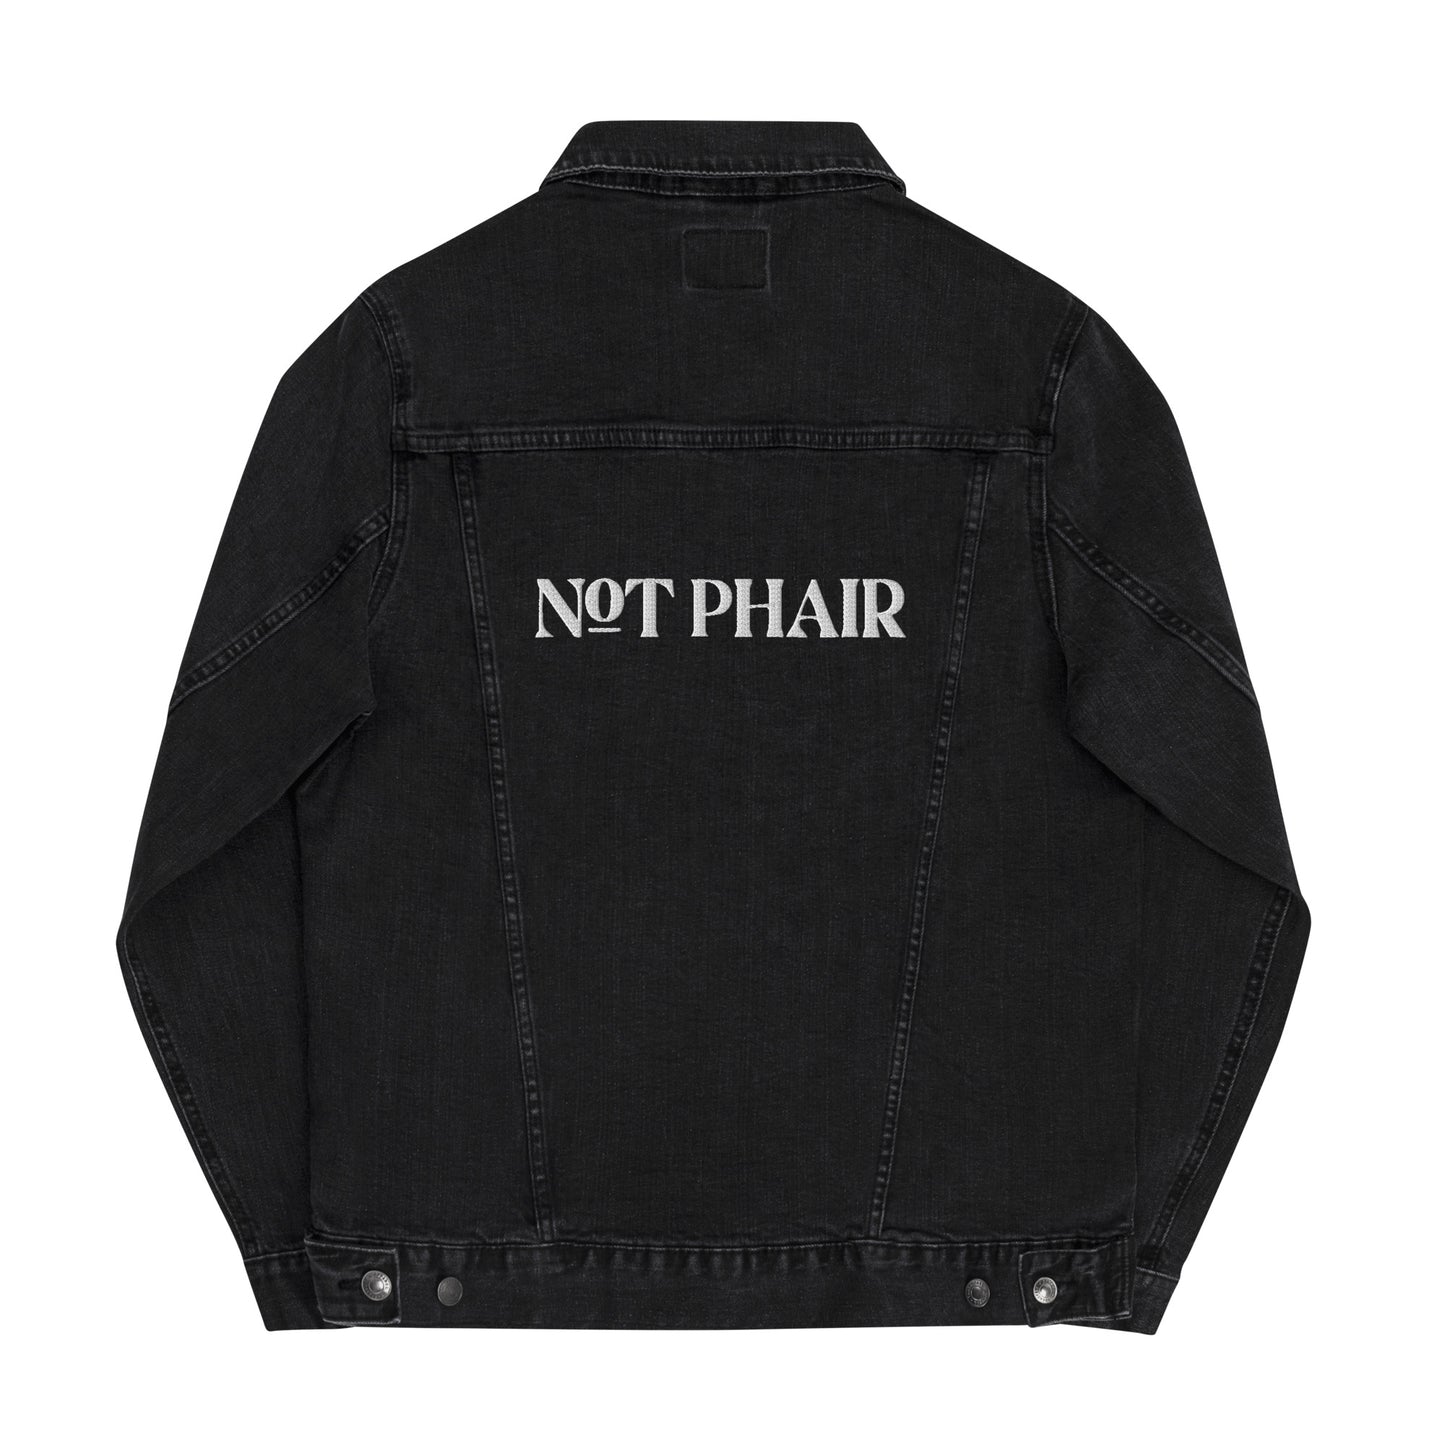 Not Phair jacket